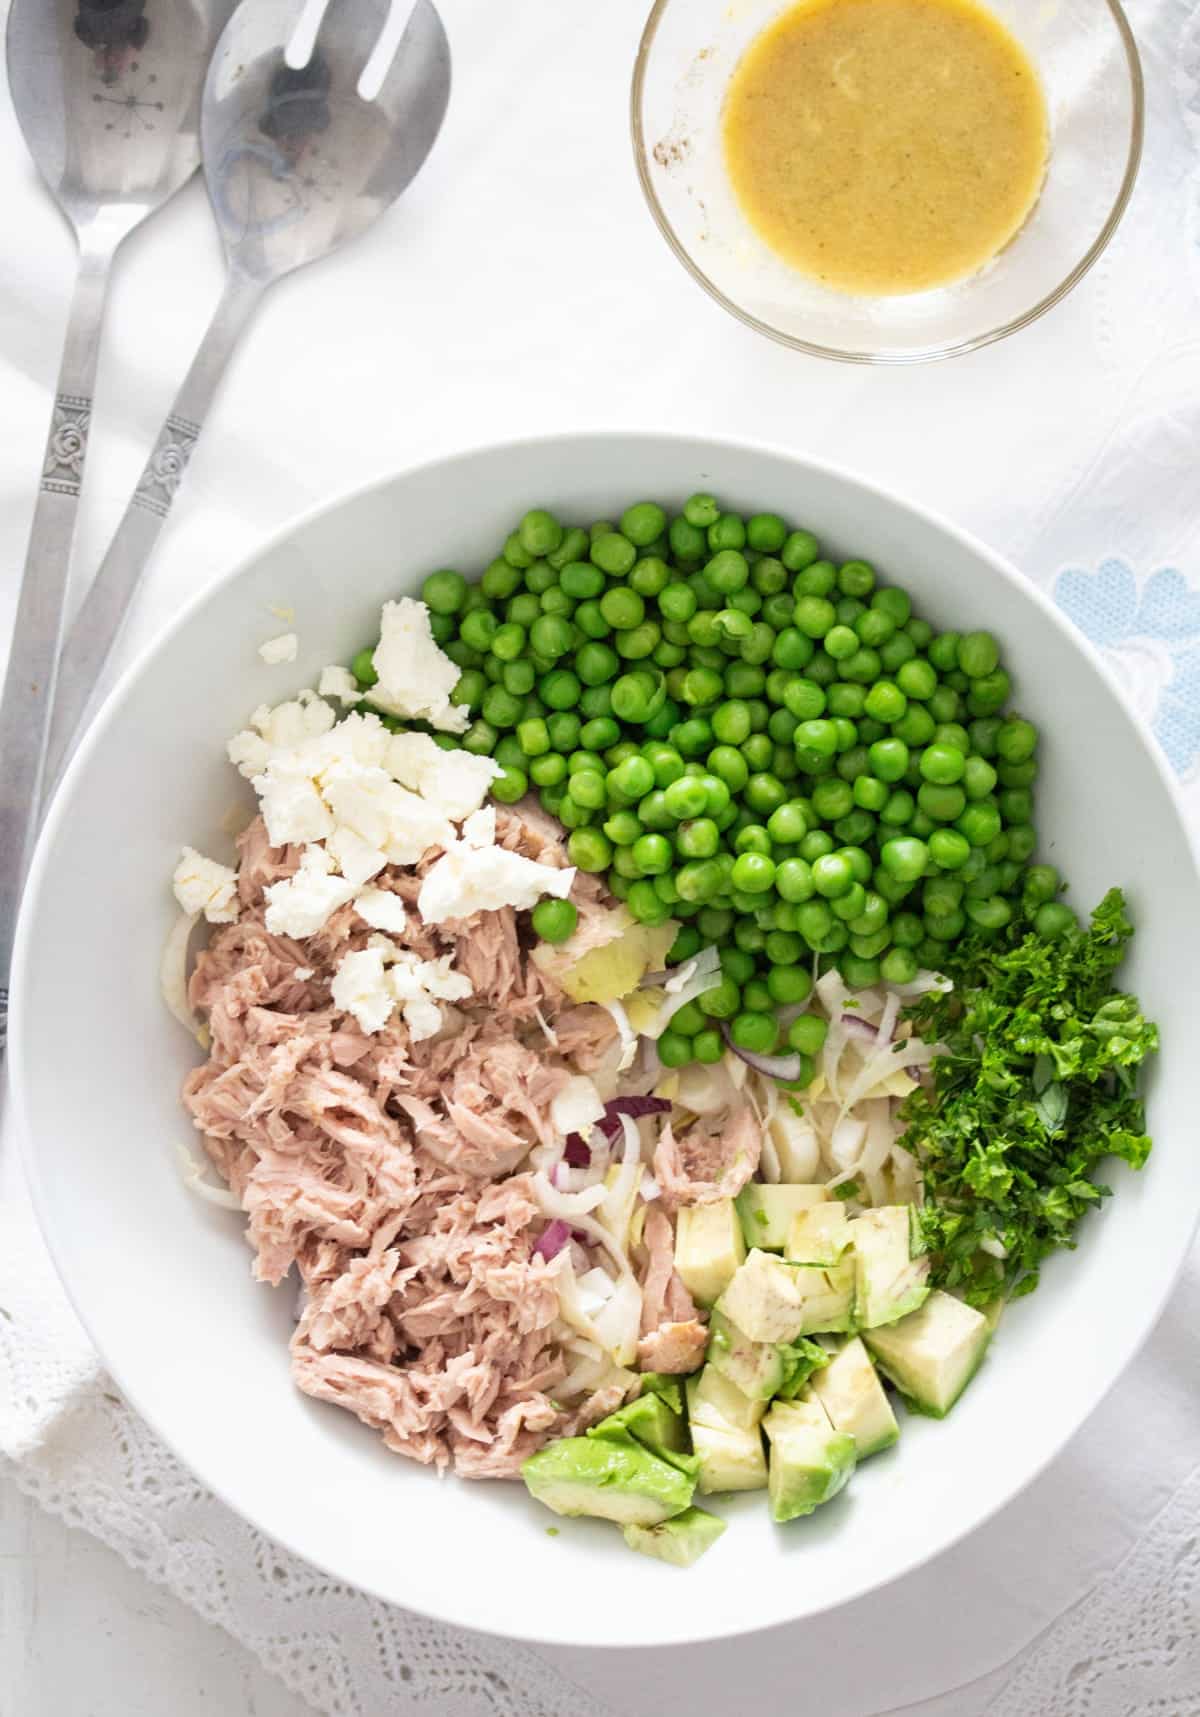 unmixed ingredients for salad: tuna, feta, peas, avocado in a bowl.